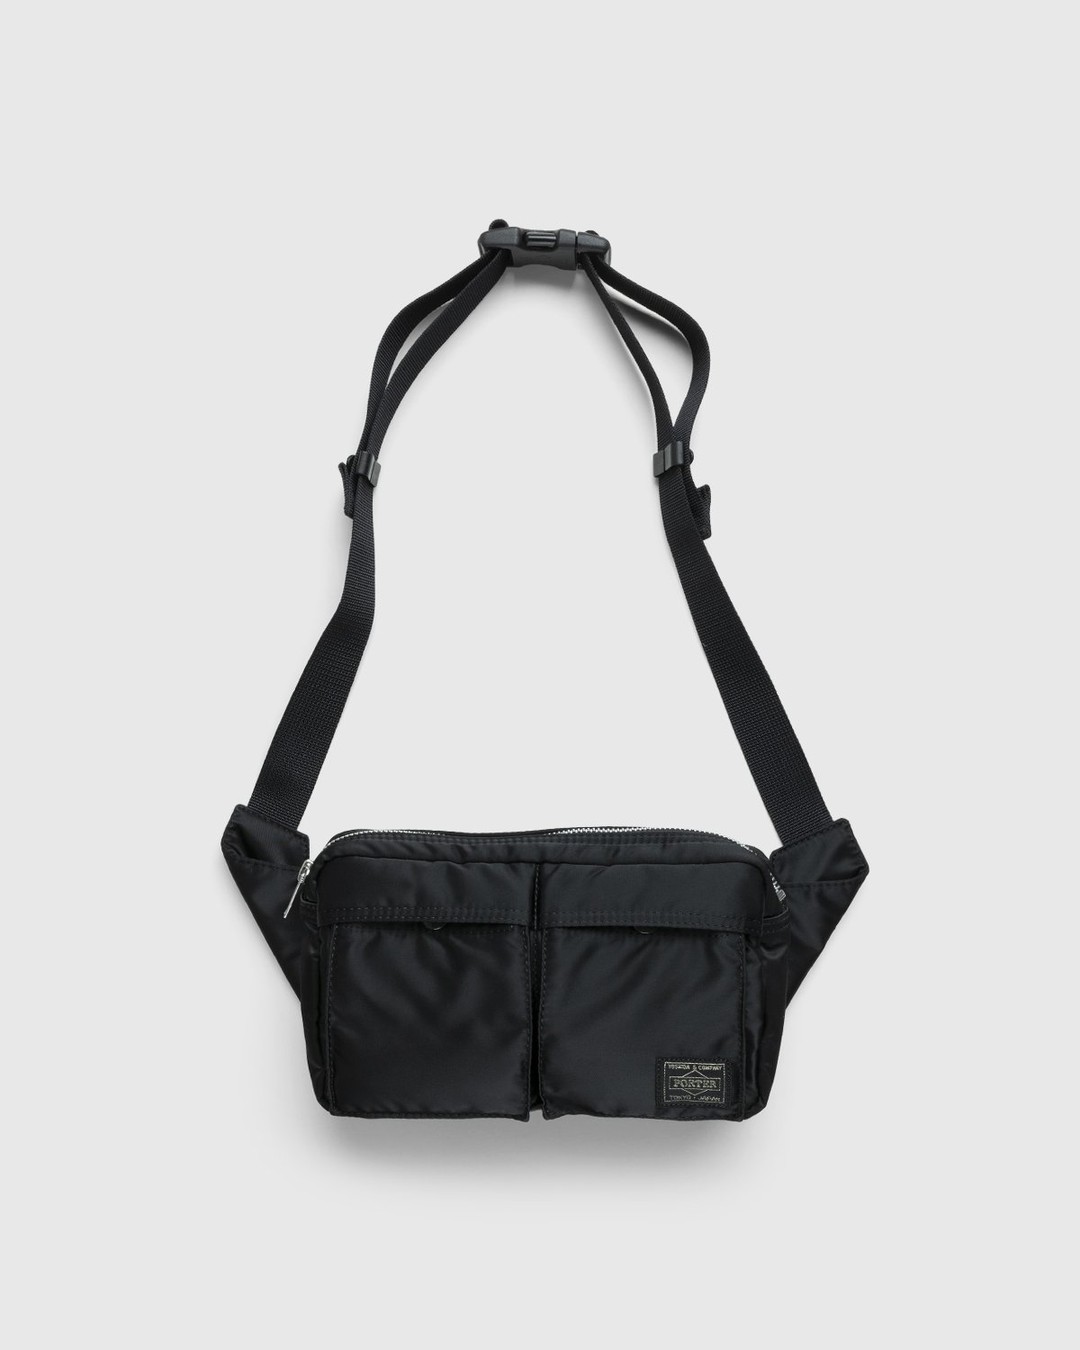 Porter-Yoshida & Co. – Tanker Waist Belt Black - Bags - Black - Image 1